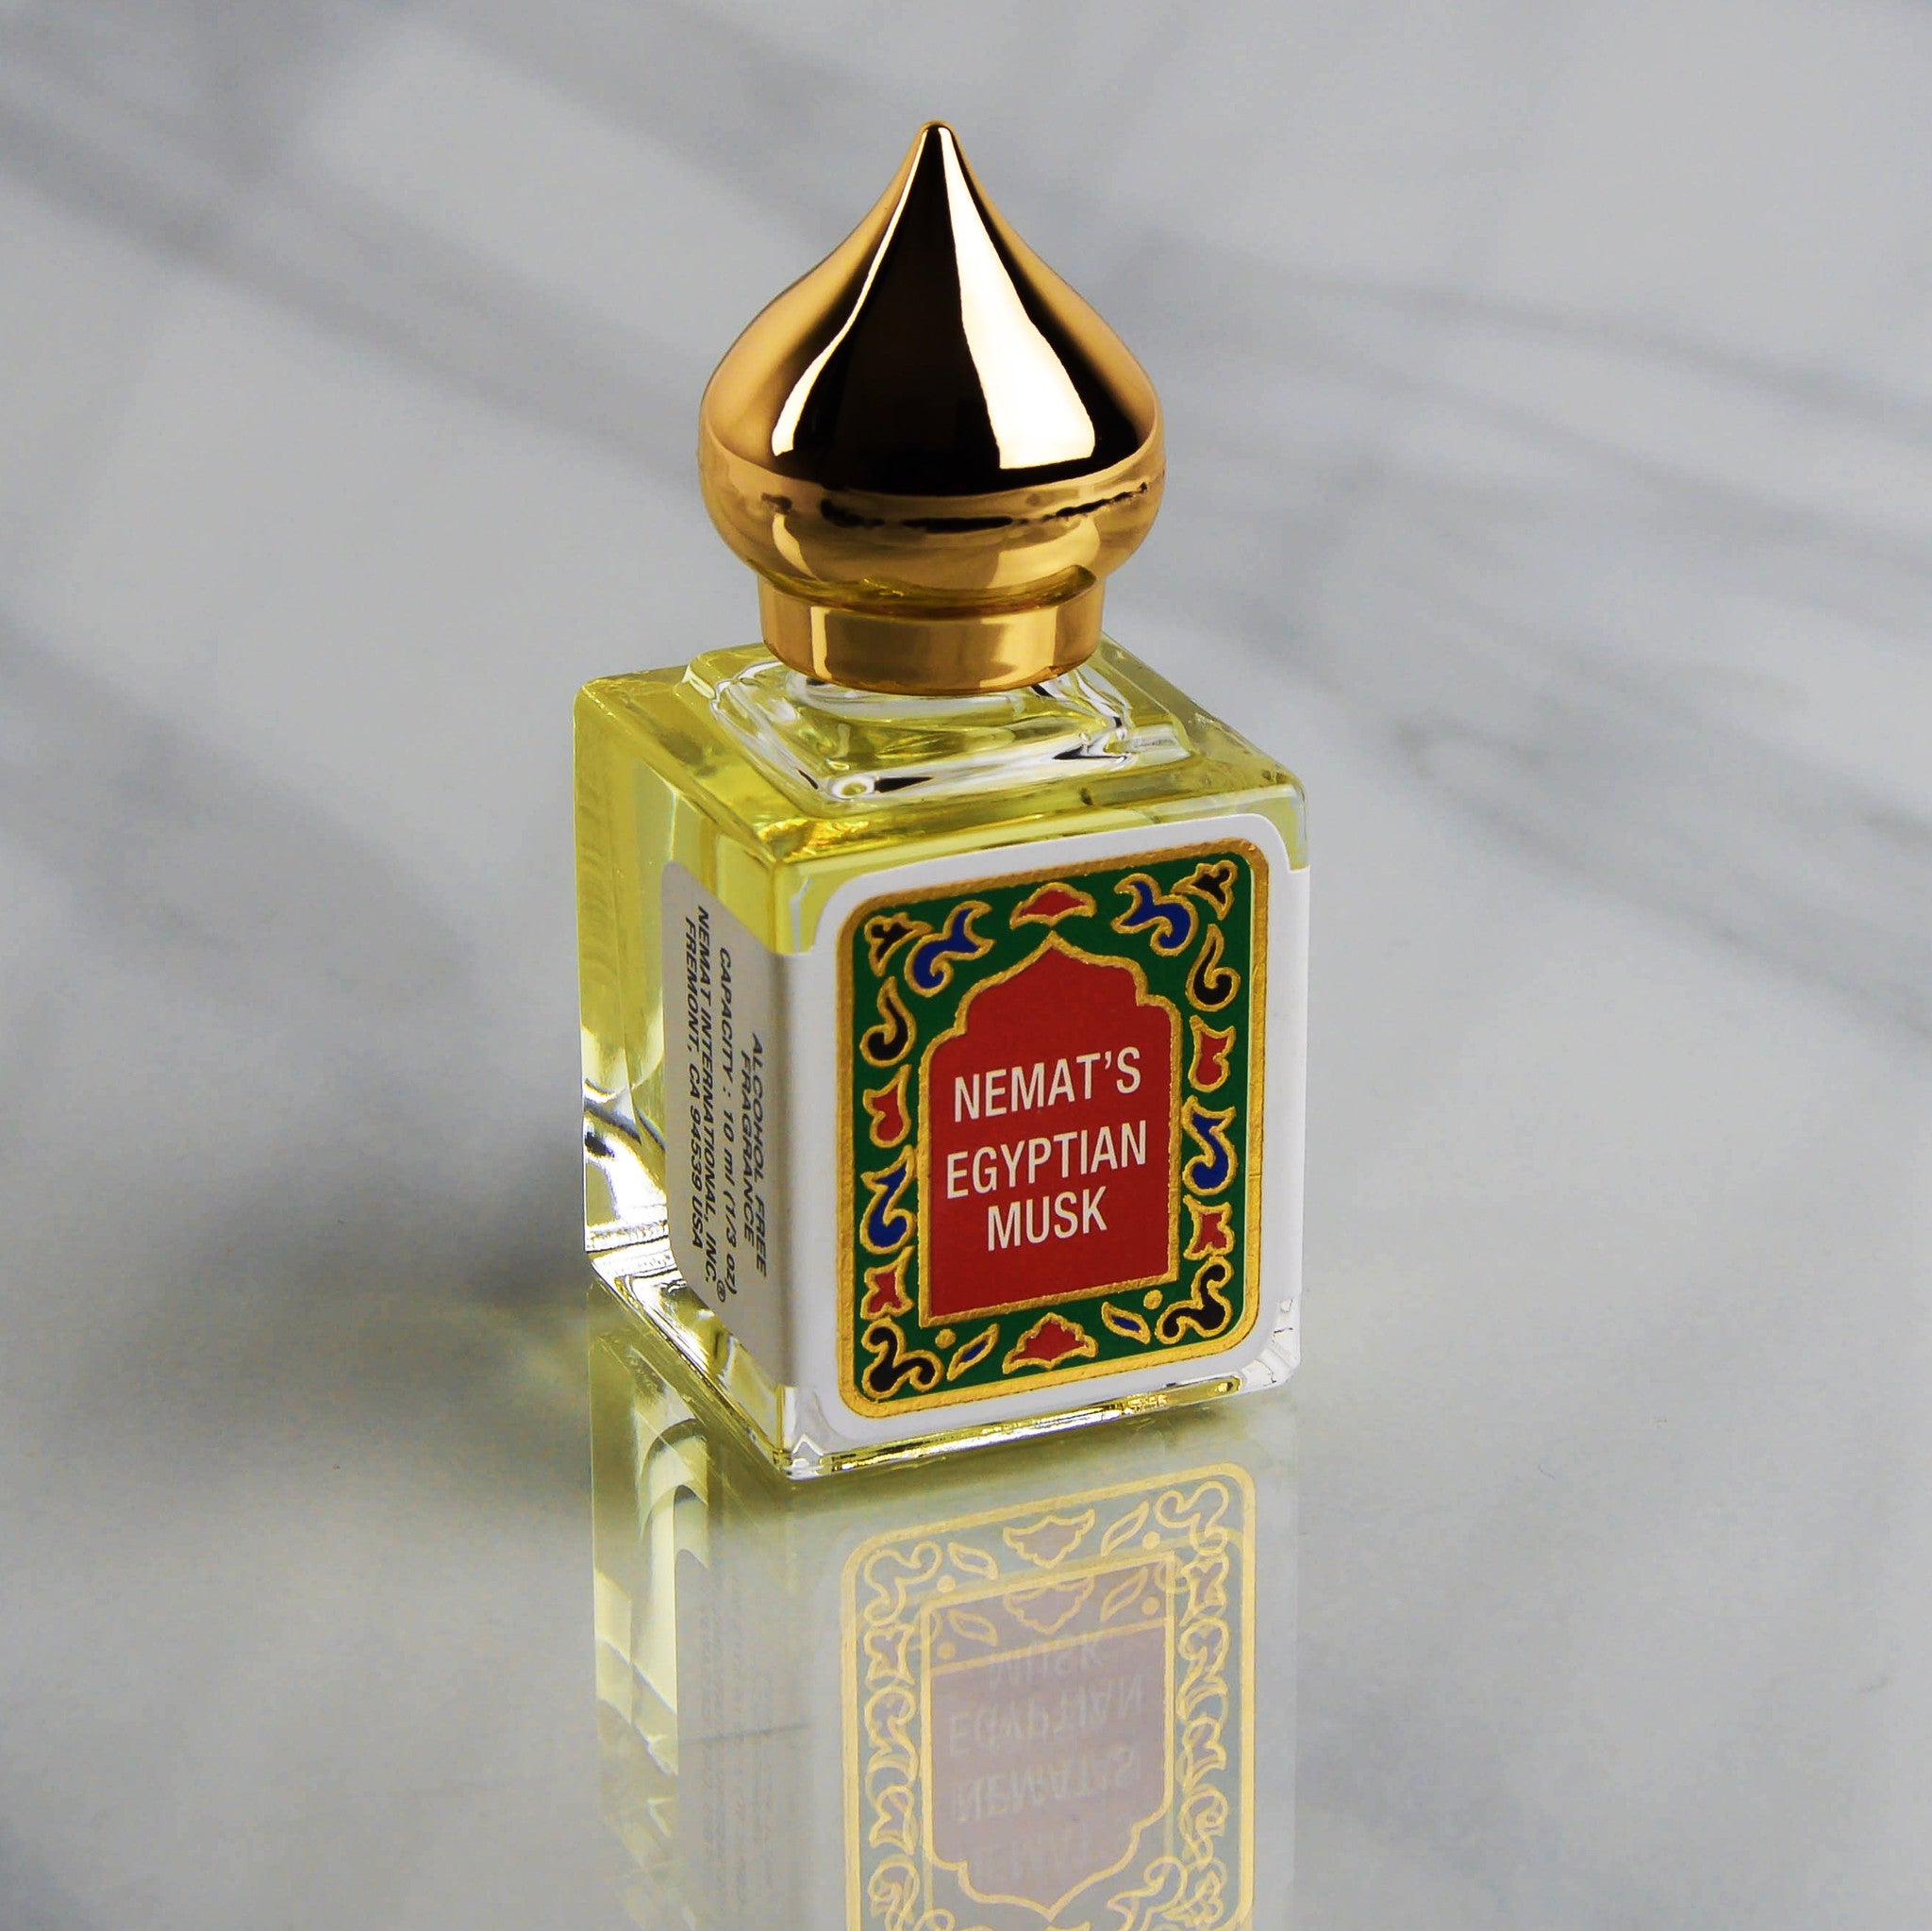 White Musk Essential Oil Fragrance Perfume Body Oil 1/3oz Roll On